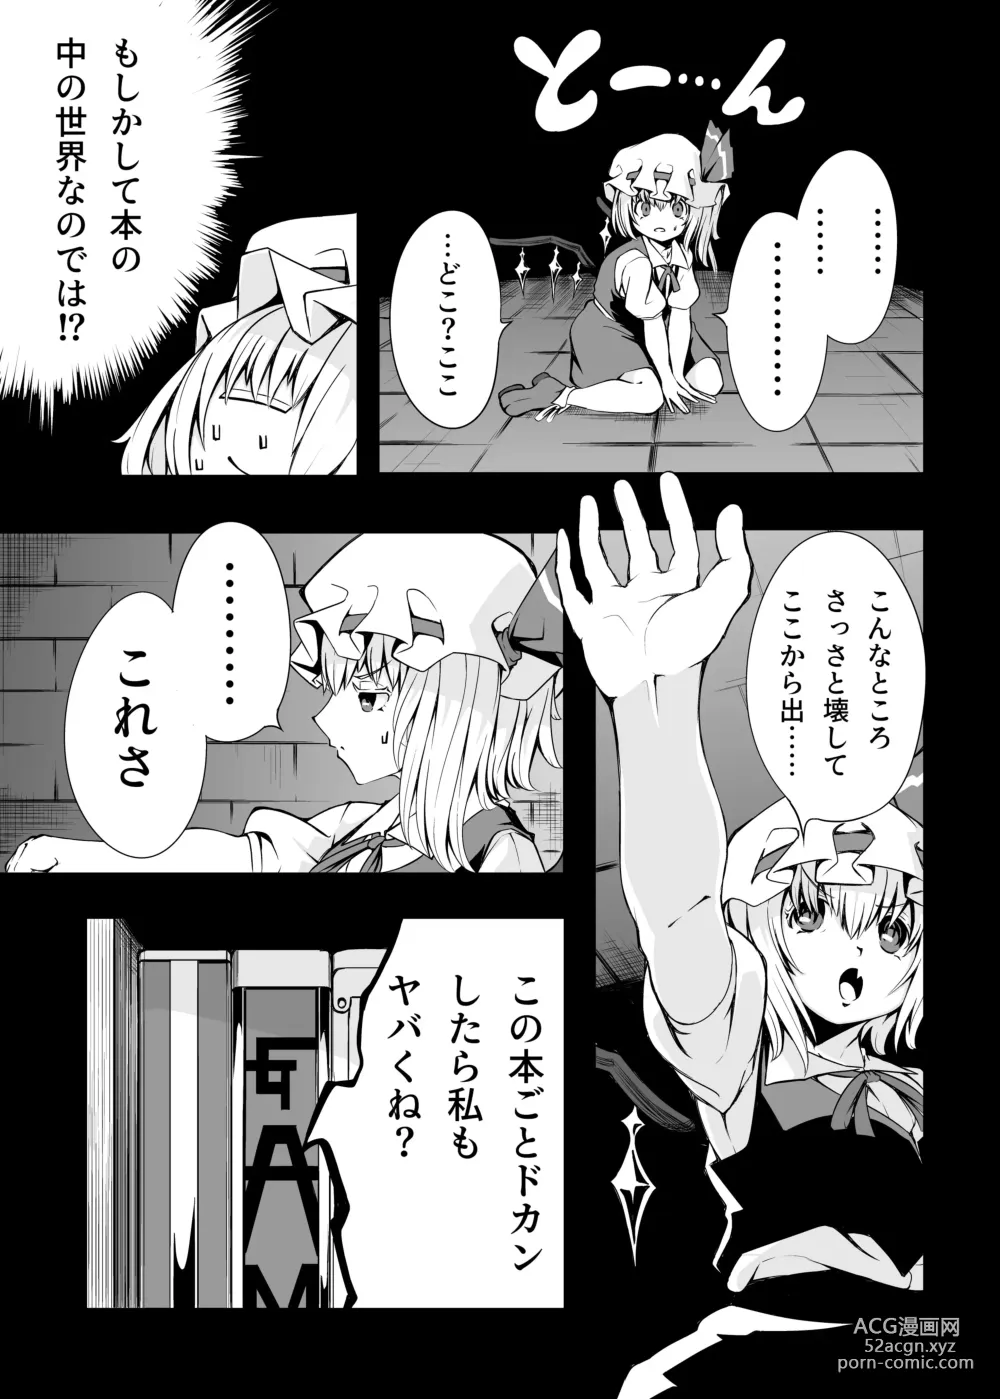 Page 4 of doujinshi Flan-chan and ETD